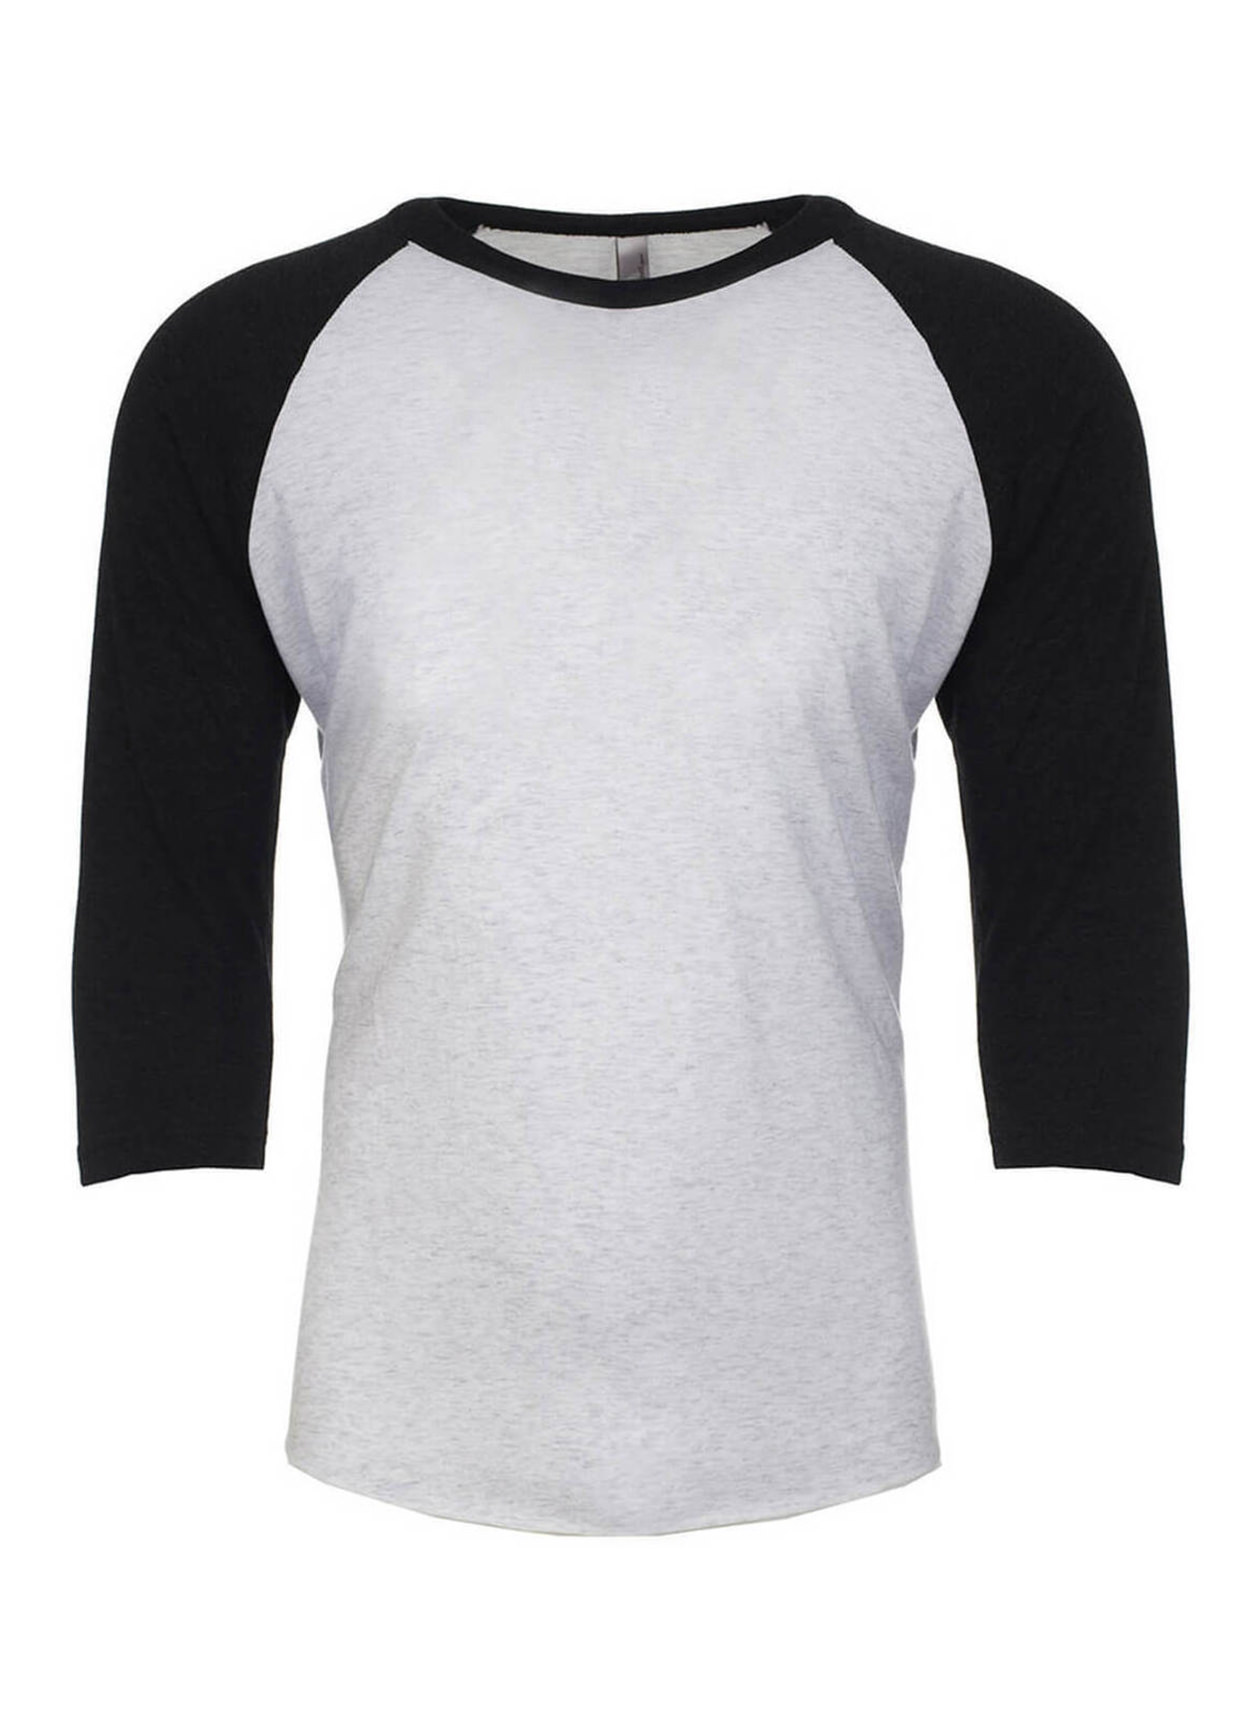 Next Level Men's Vintage Black / Heather White Unisex Triblend 3/4-Sleeve Raglan T-Shirt